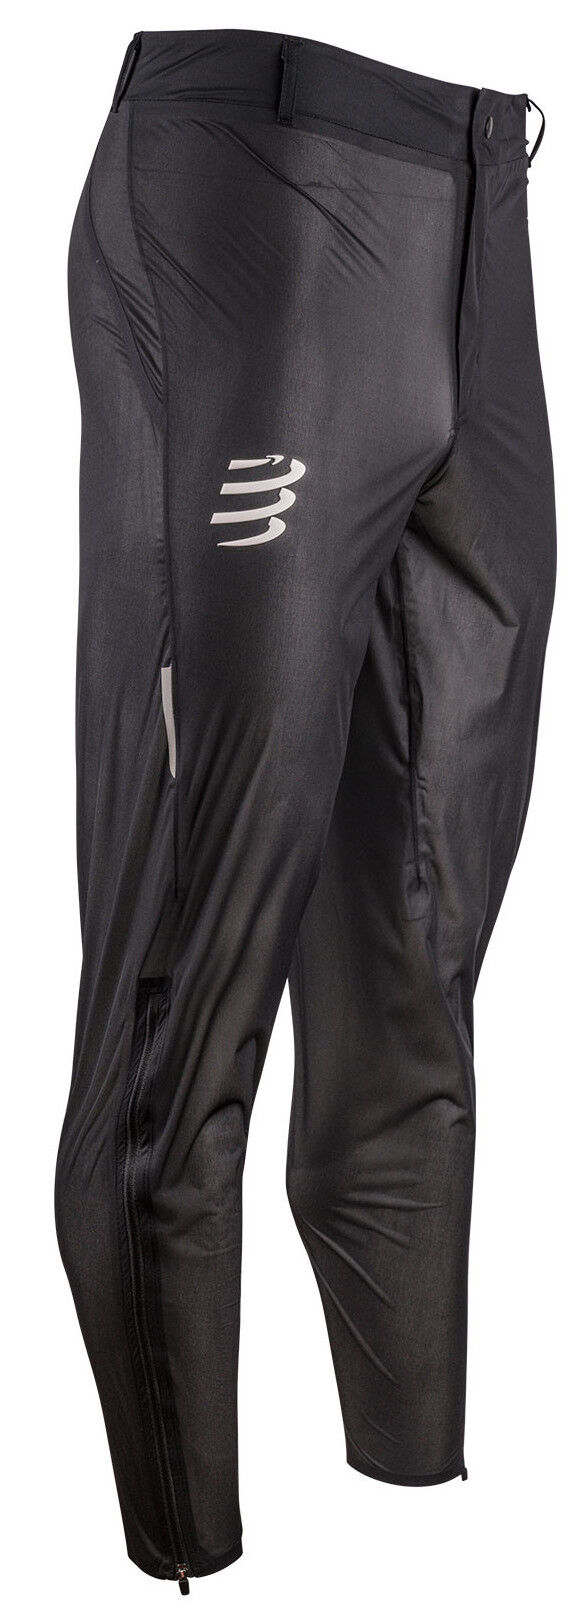 Compressport Hurricane Waterproof 10/10 Pants - Pantalónes impermeable - Hombre